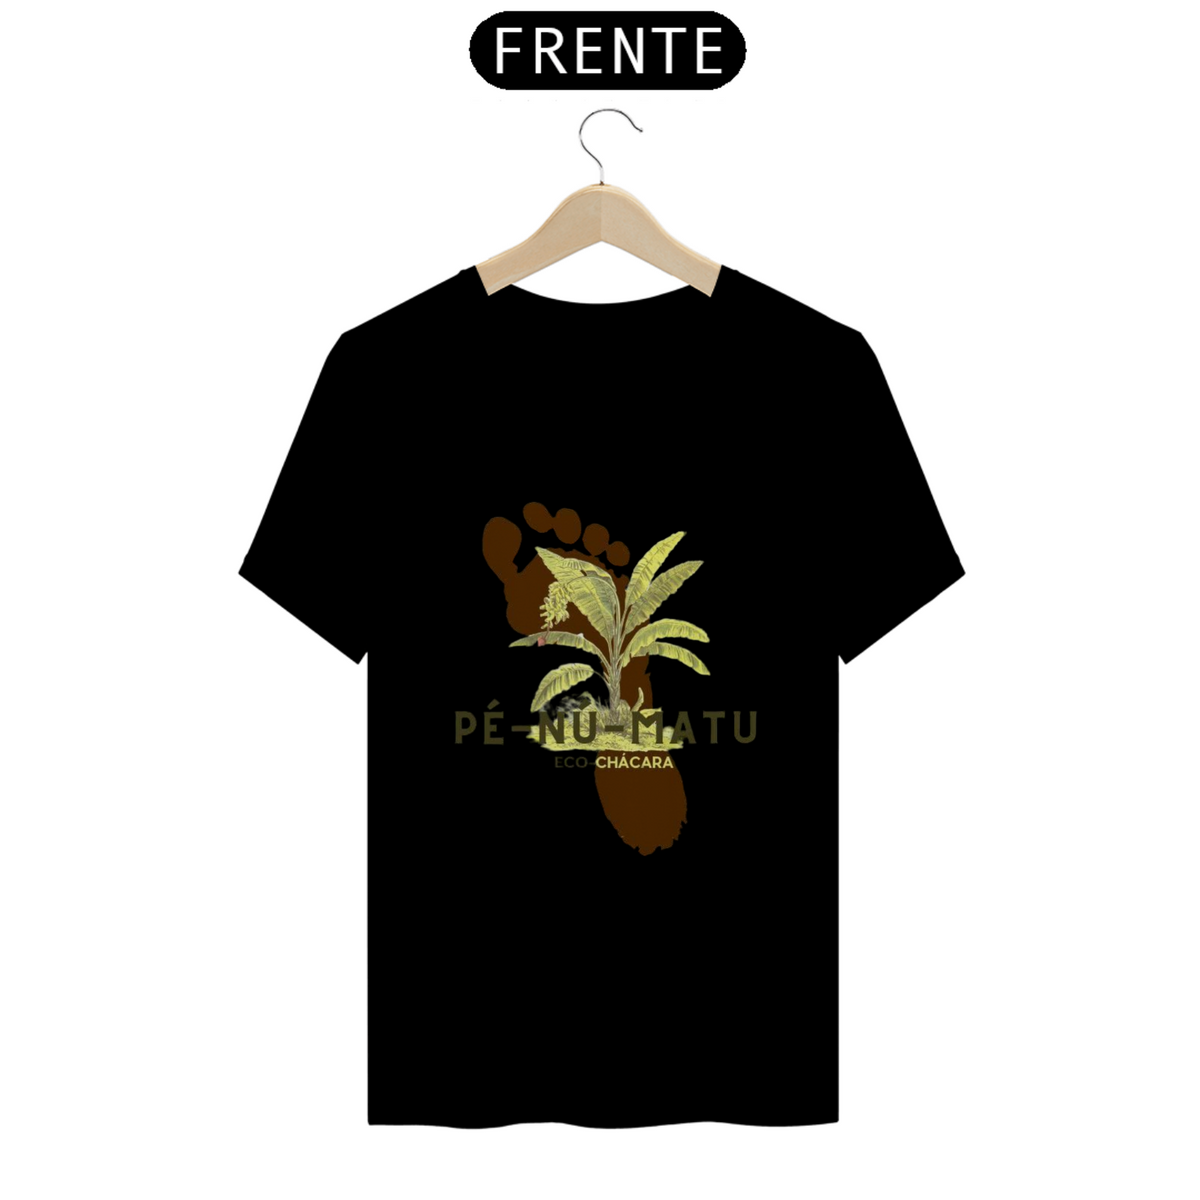 Nome do produto: Camiseta Masculina Exclusiva Eco Chácara Pé Nu Matu